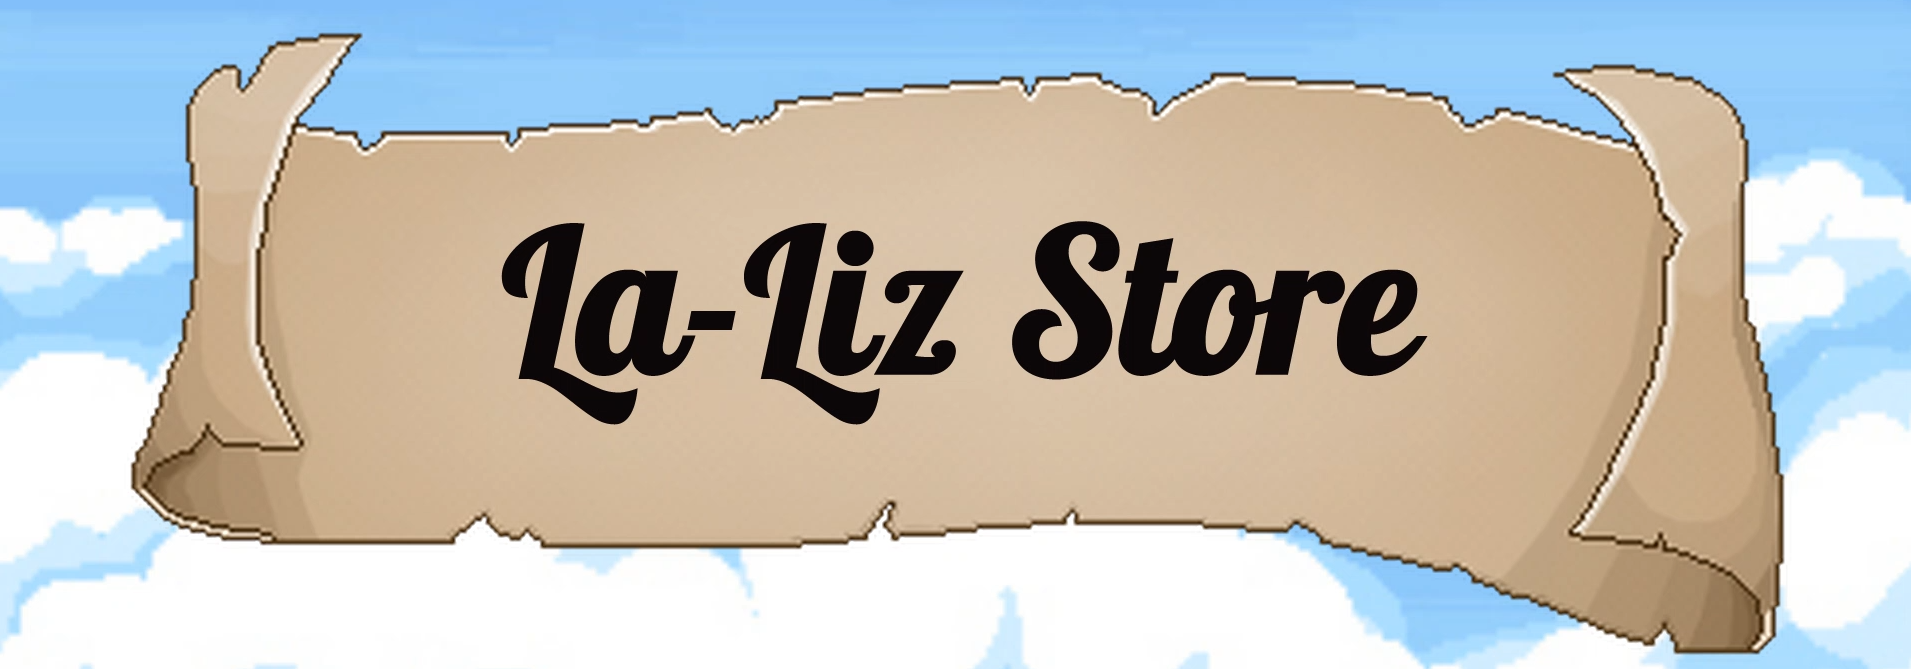 La-Liz Store